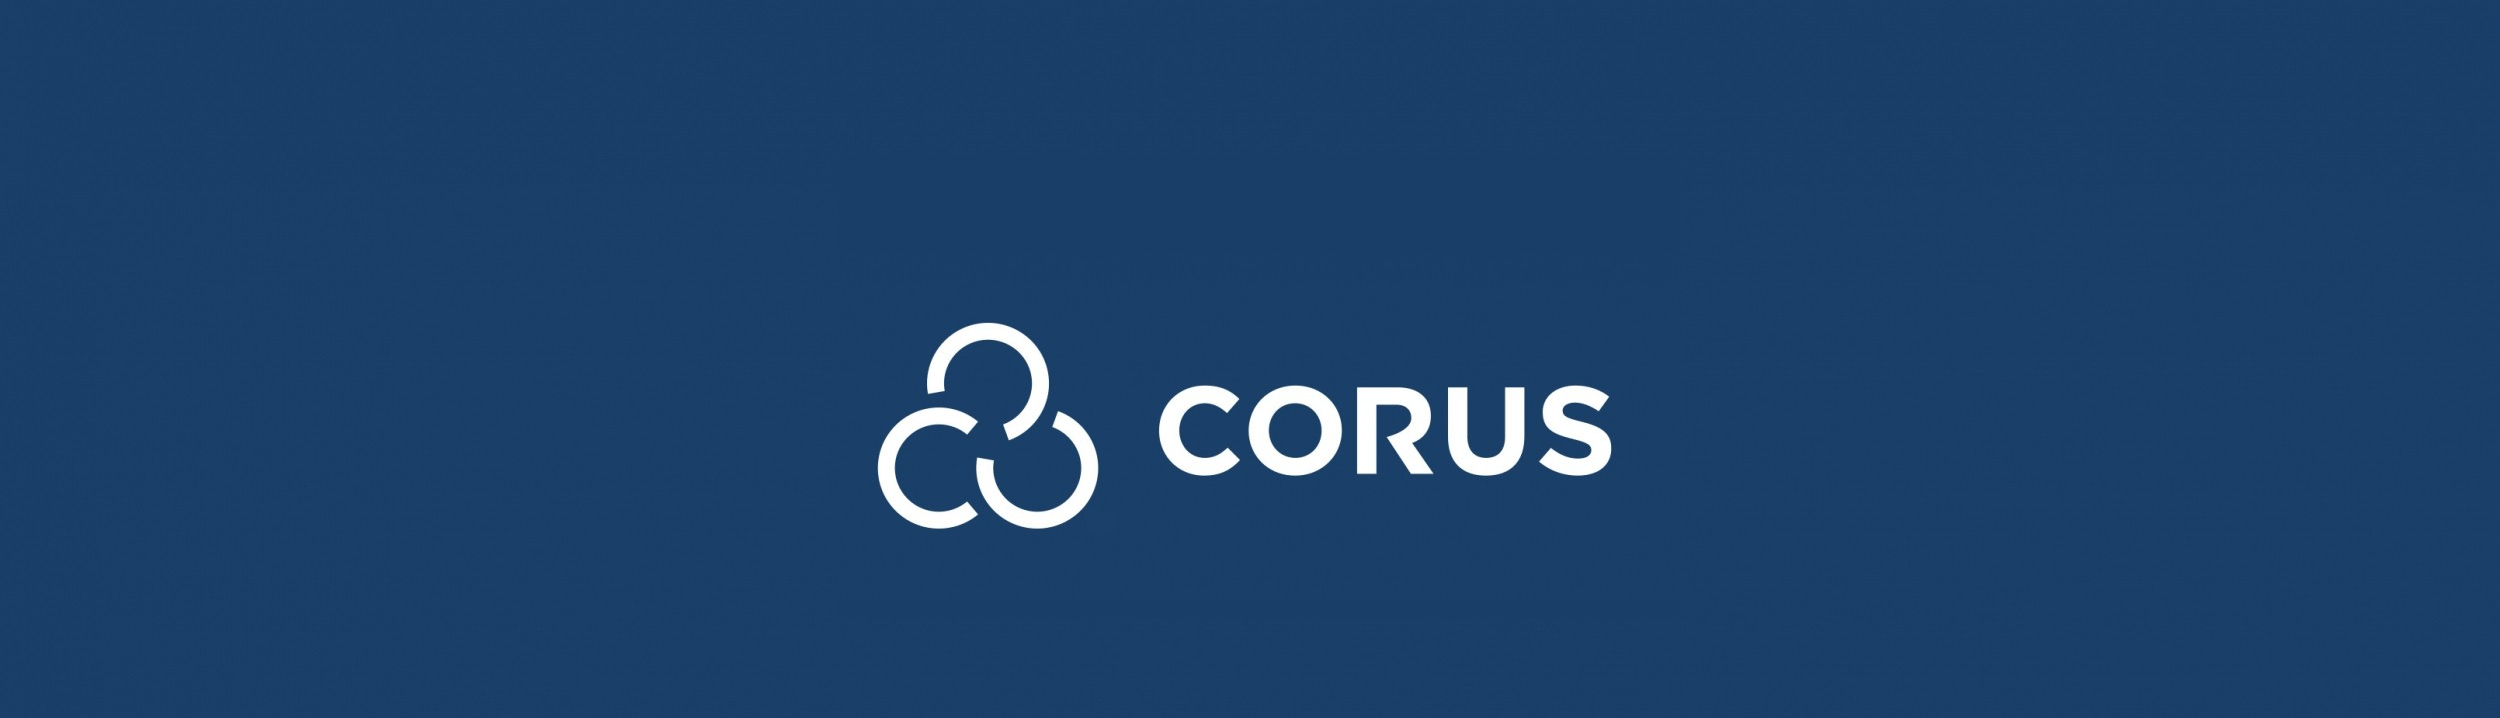 Corus International Contracting Opportunities